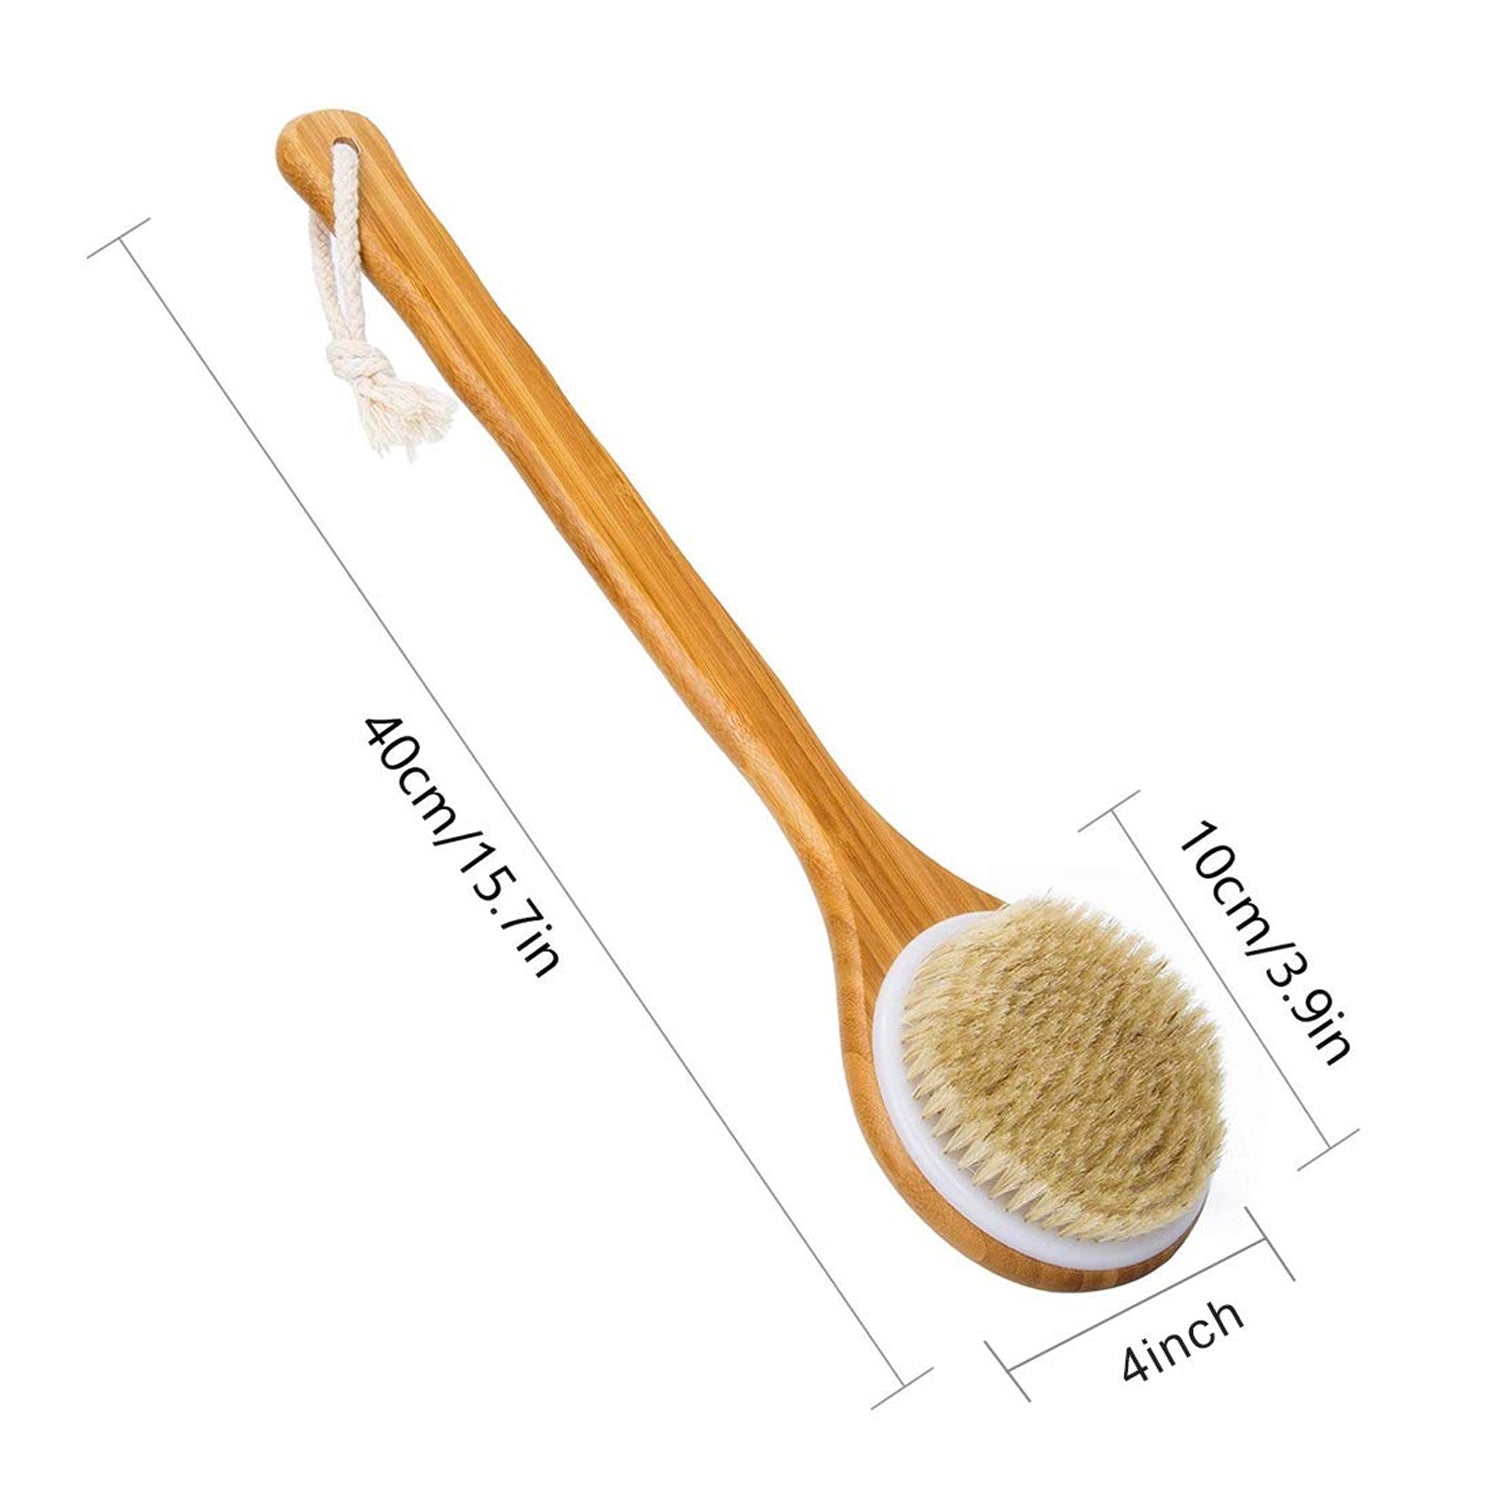 6700 Body Brush Dry Brushing Back Scrubber Shower Bath Brush Bamboo Long Handle Natural Bristles exfoliating Massage Improve Blood Circulation Cellulite DeoDap